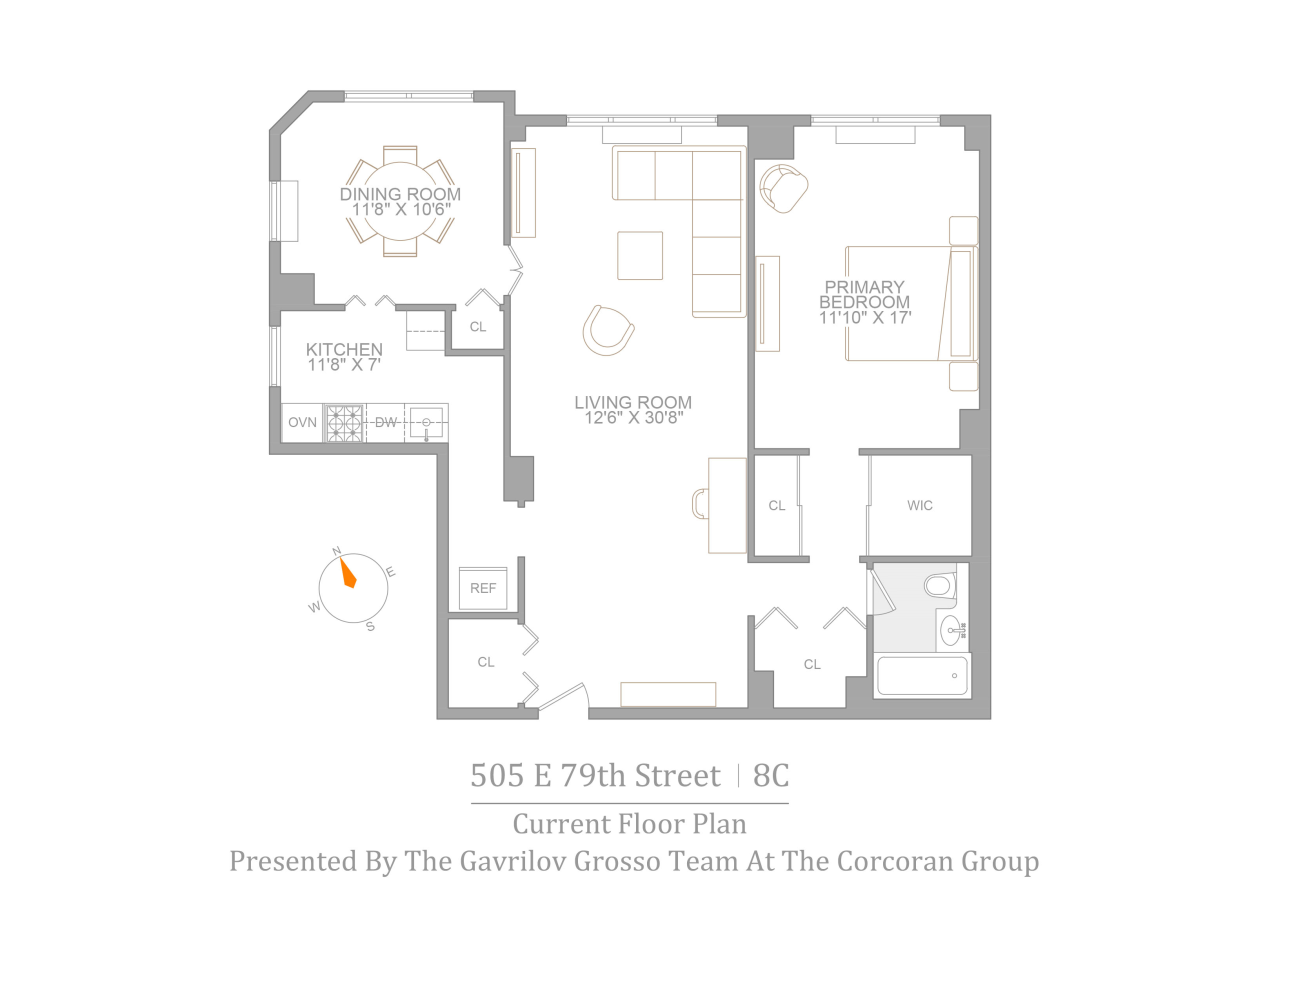 Floorplan for 505 East 79th Street, 8C